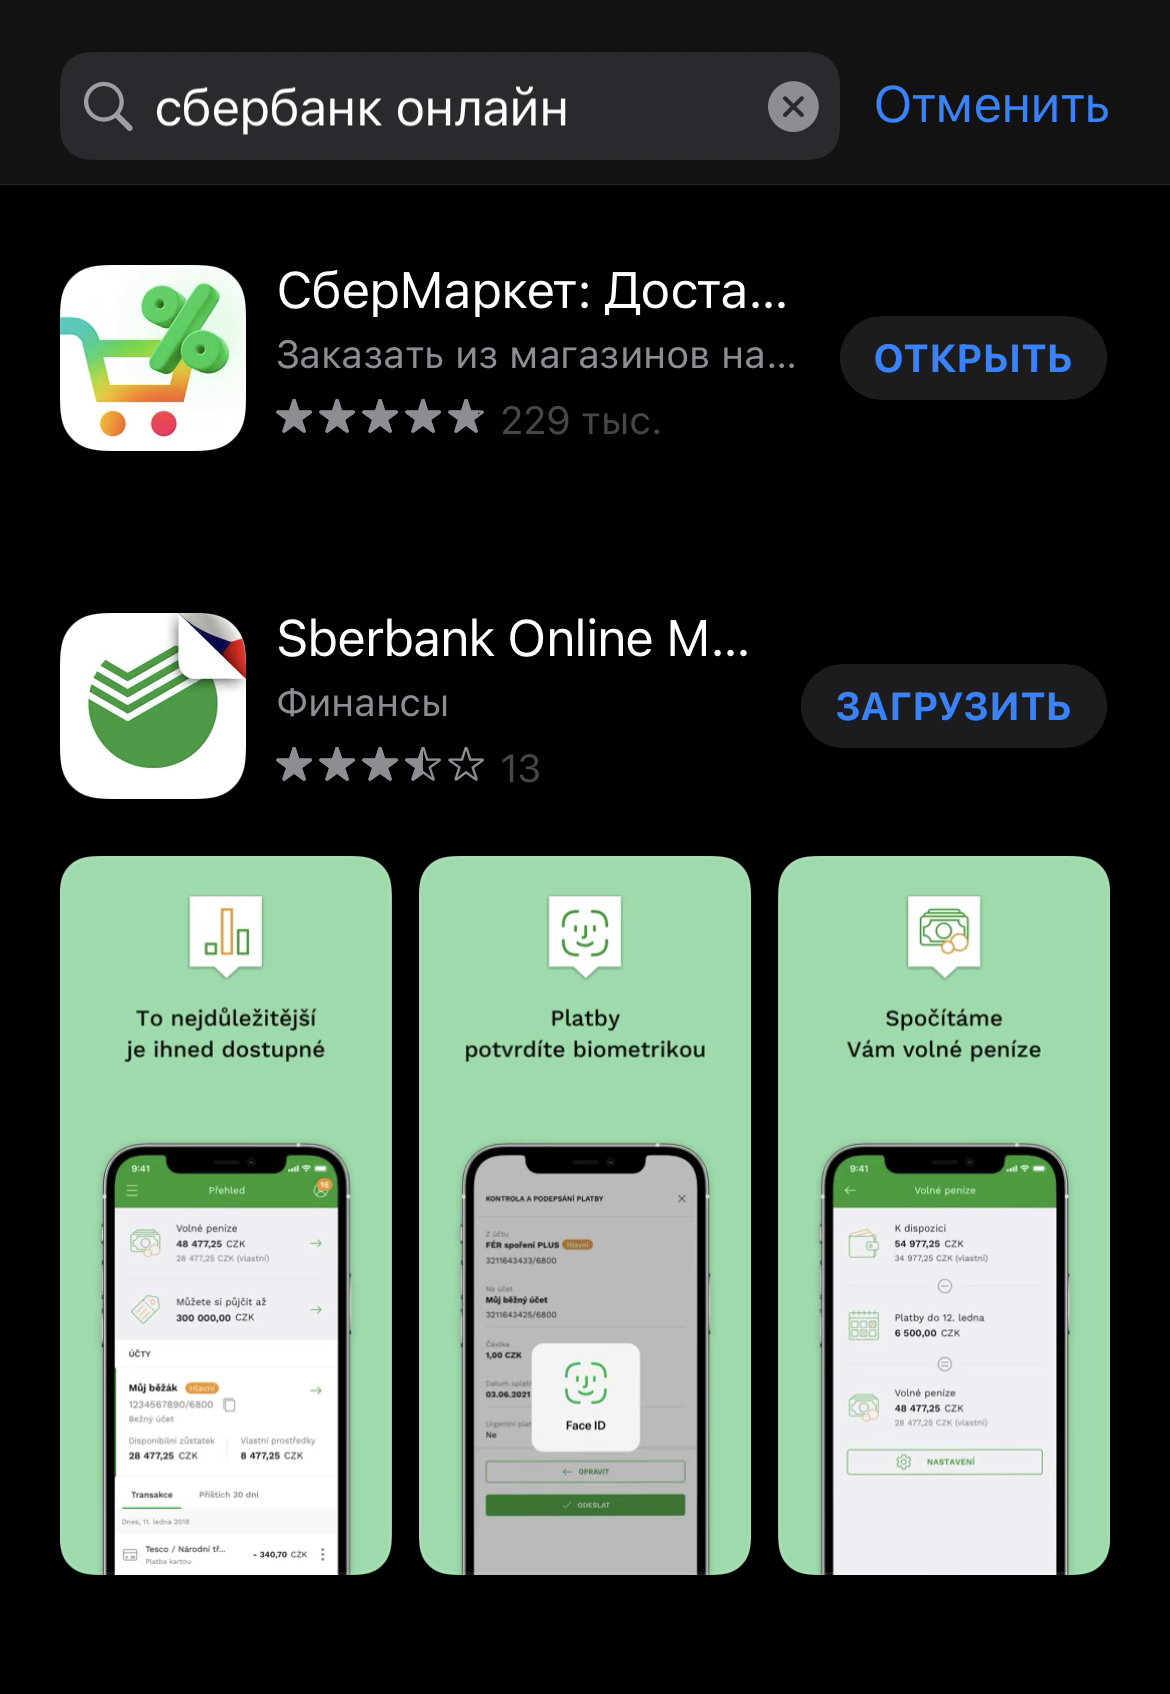 Приложение СберБанк Онлайн удалено из App Store